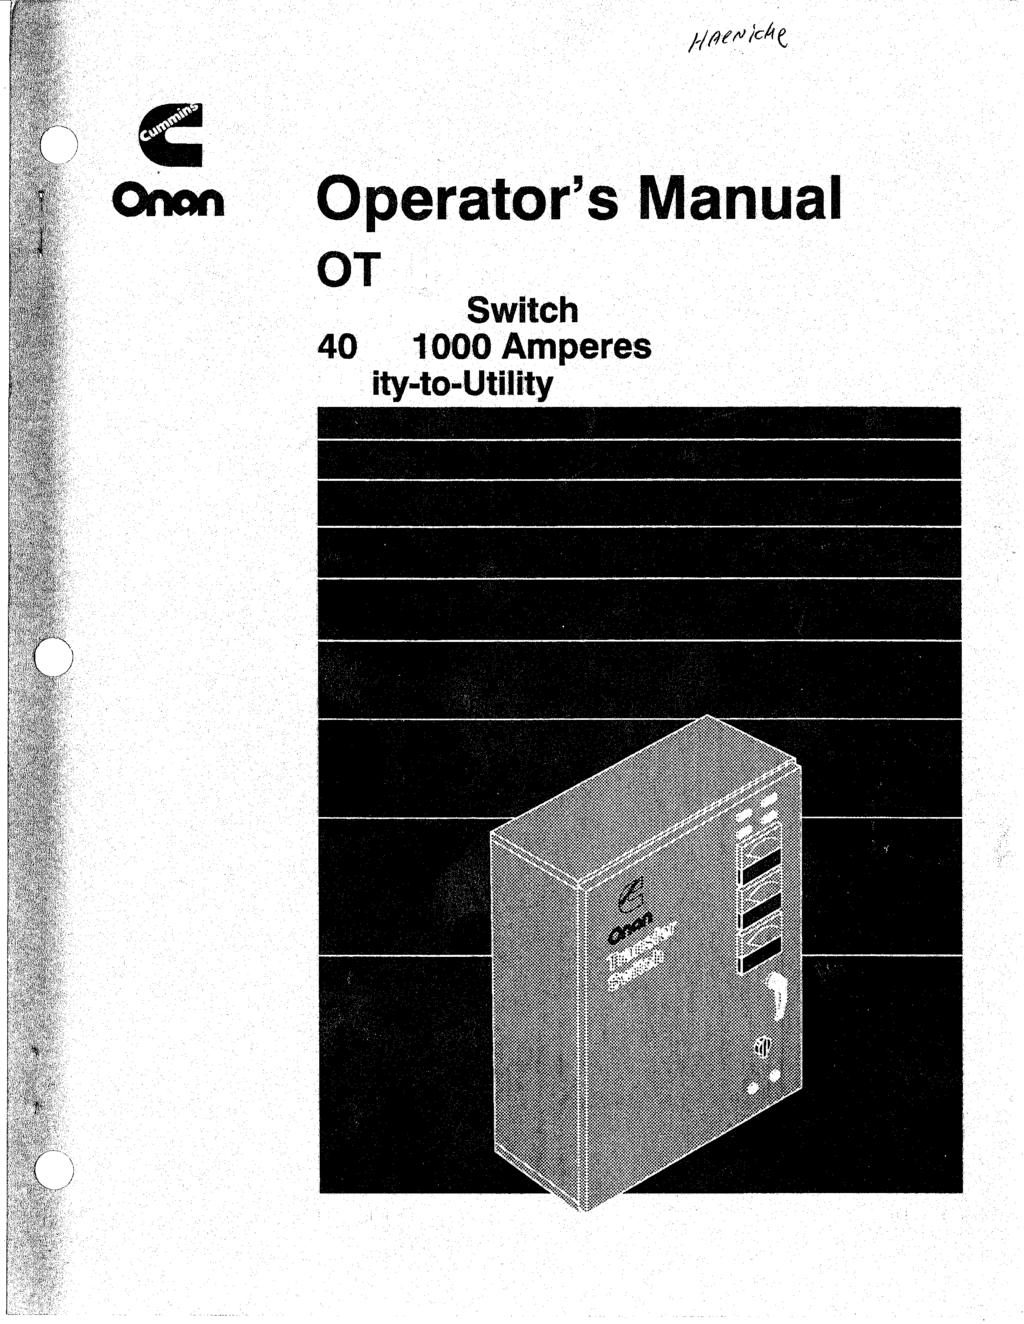 c Onon Operator's Manual OT Transfer Switch 40 to 10iOO